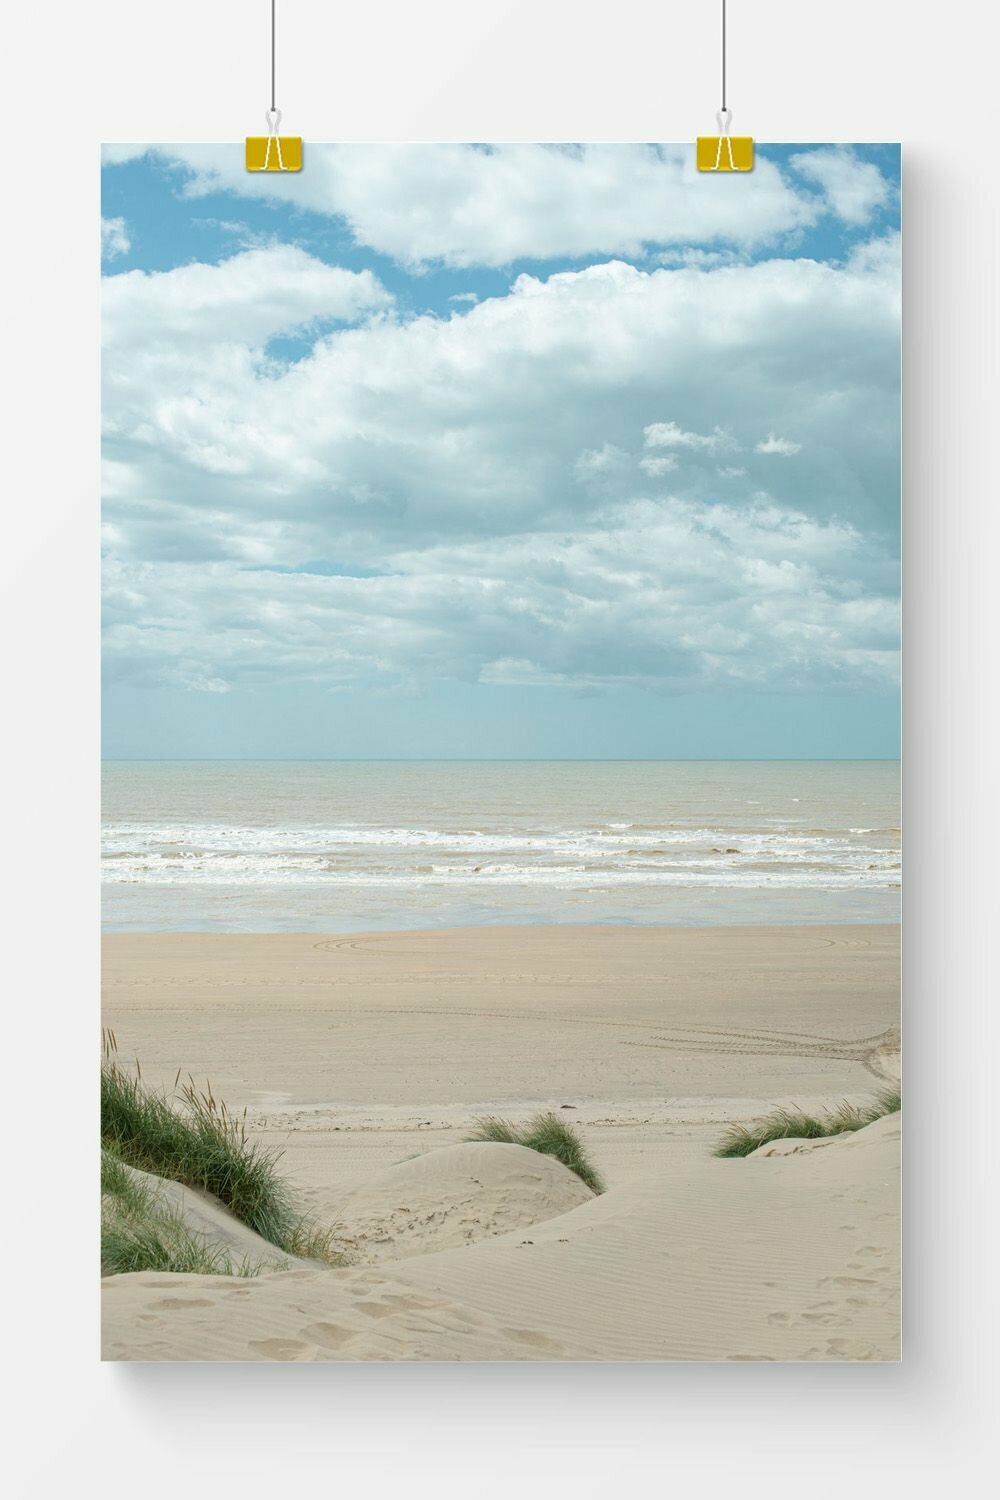 Постер для интерьера Postermarkt 40х50 см в тубусе постер Море #3